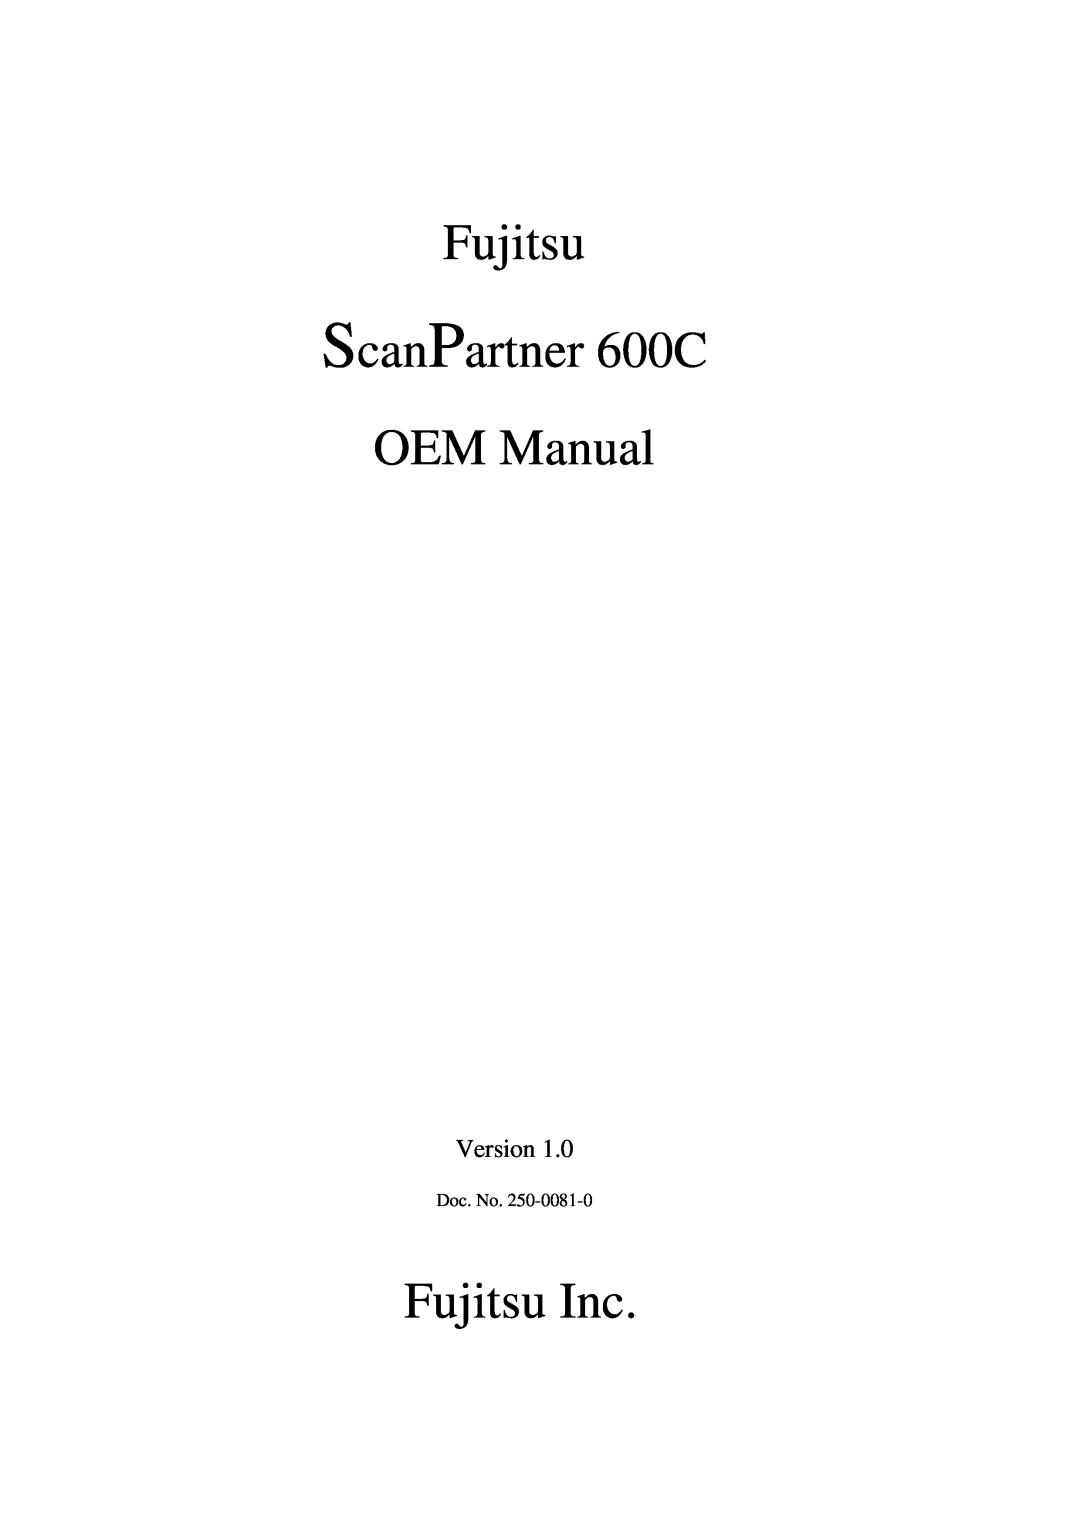 Fujitsu manual Fujitsu ScanPartner 600C OEM Manual, Fujitsu Inc, Version 